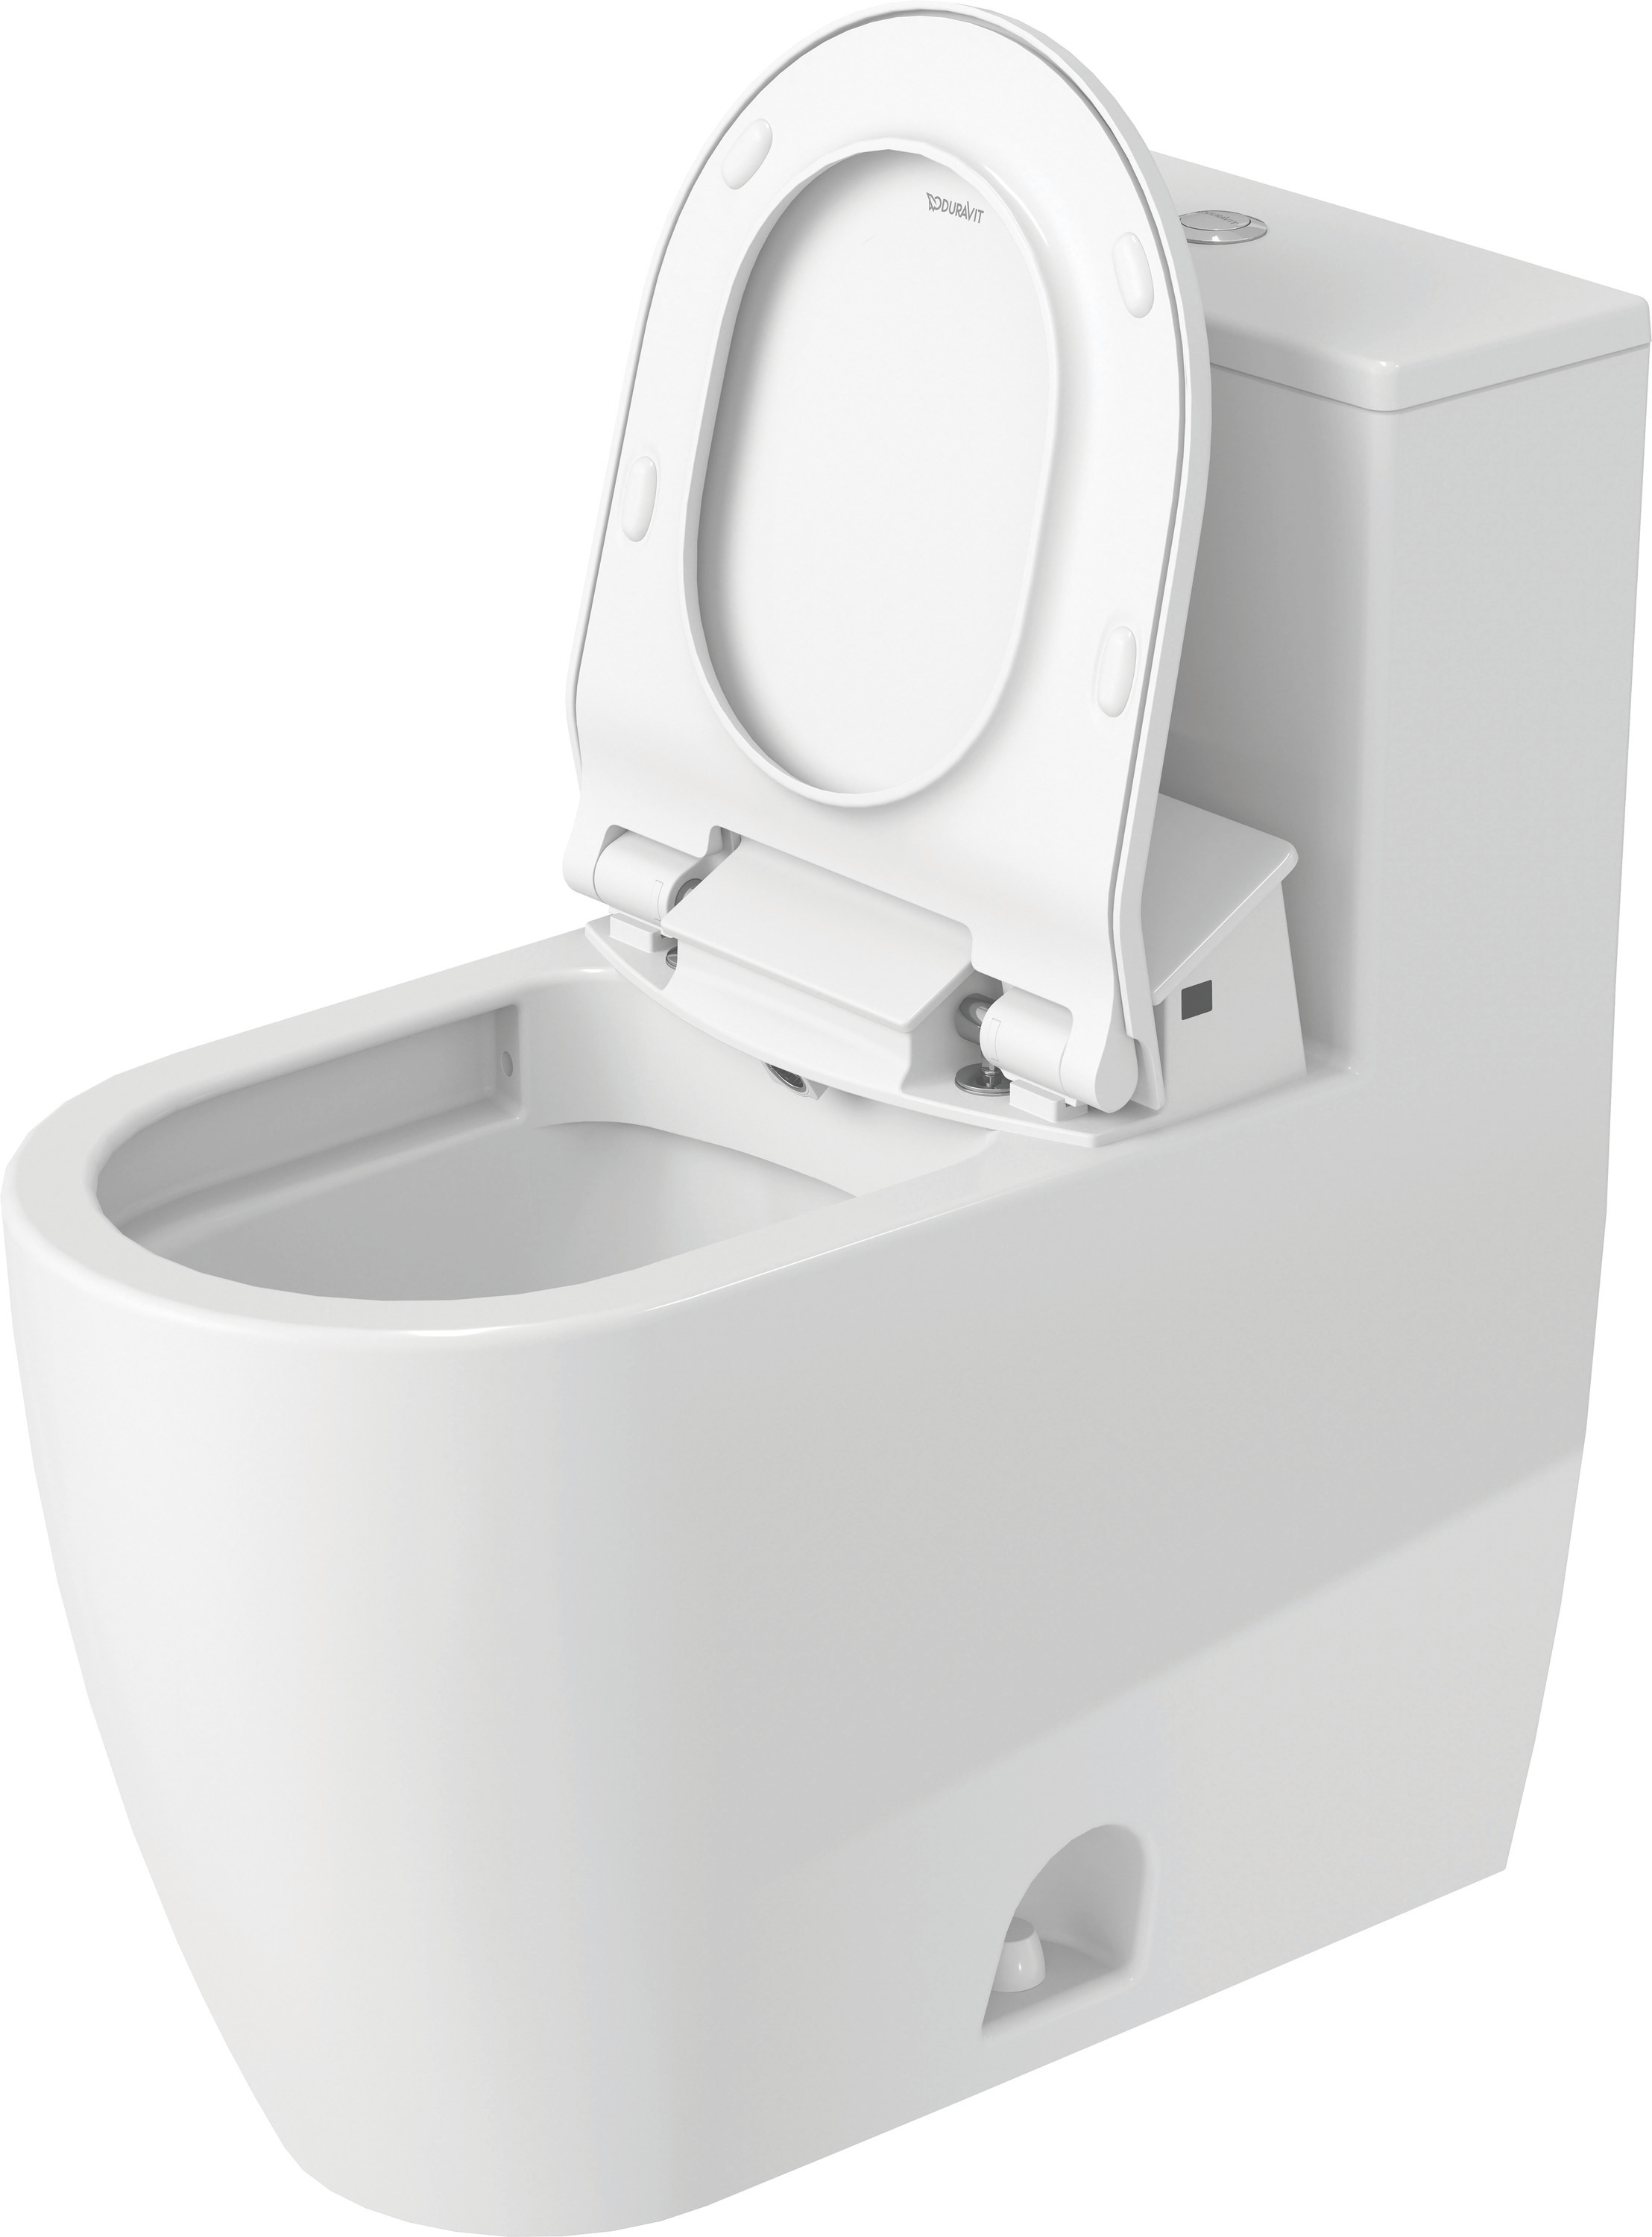 SensoWash Slim Dusch WC-Sitz für ME, S2,S3,DN, 220-240VAC,EN1717